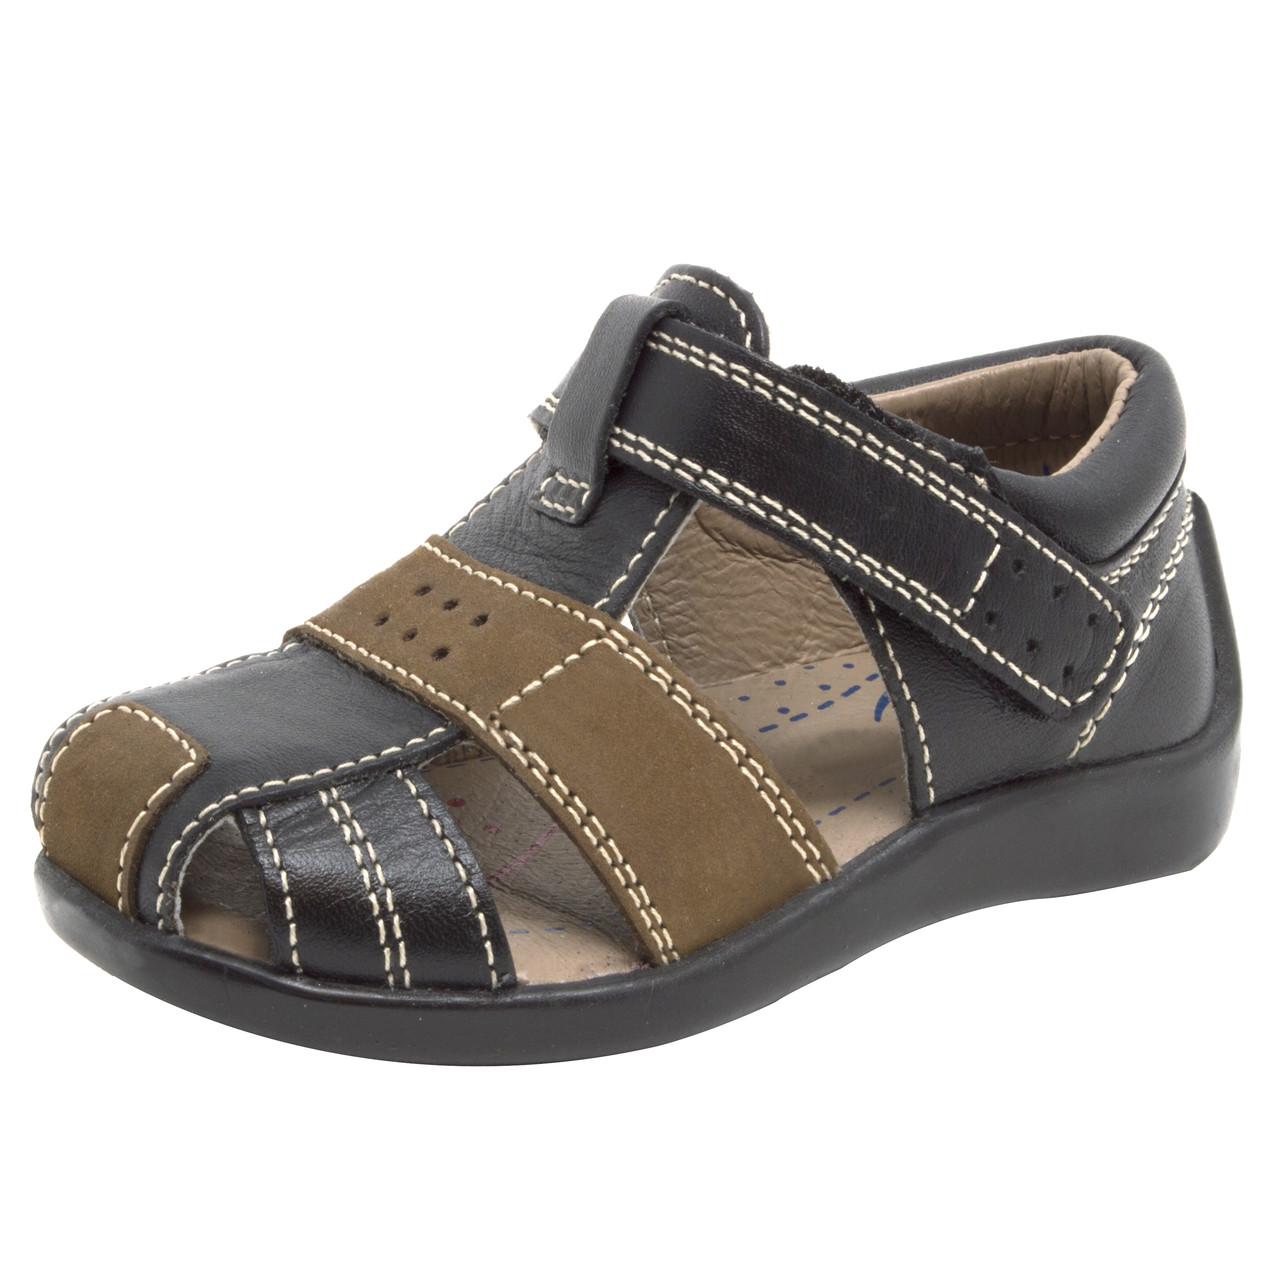 BOBBLEKIDS Baby Boys Caramel Sandal Leather Shoes Thomas 3.5 M : Amazon.in:  Shoes & Handbags